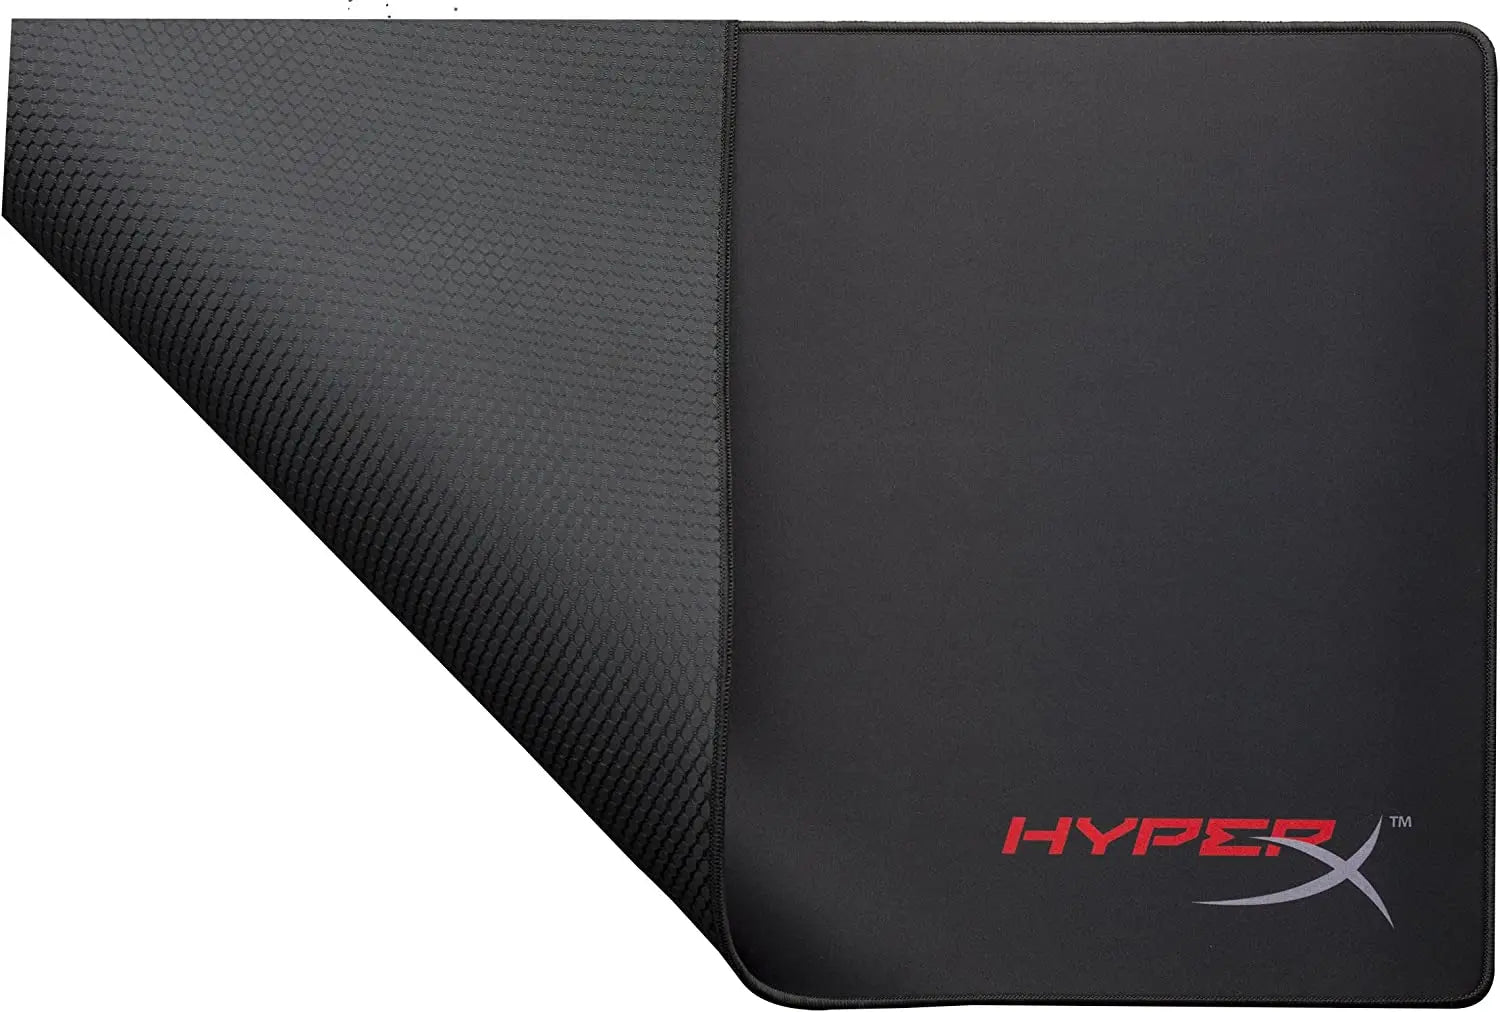 Mouse Pad Fury S Pro Gaming XL HyperX (HX-MPFS-XL)